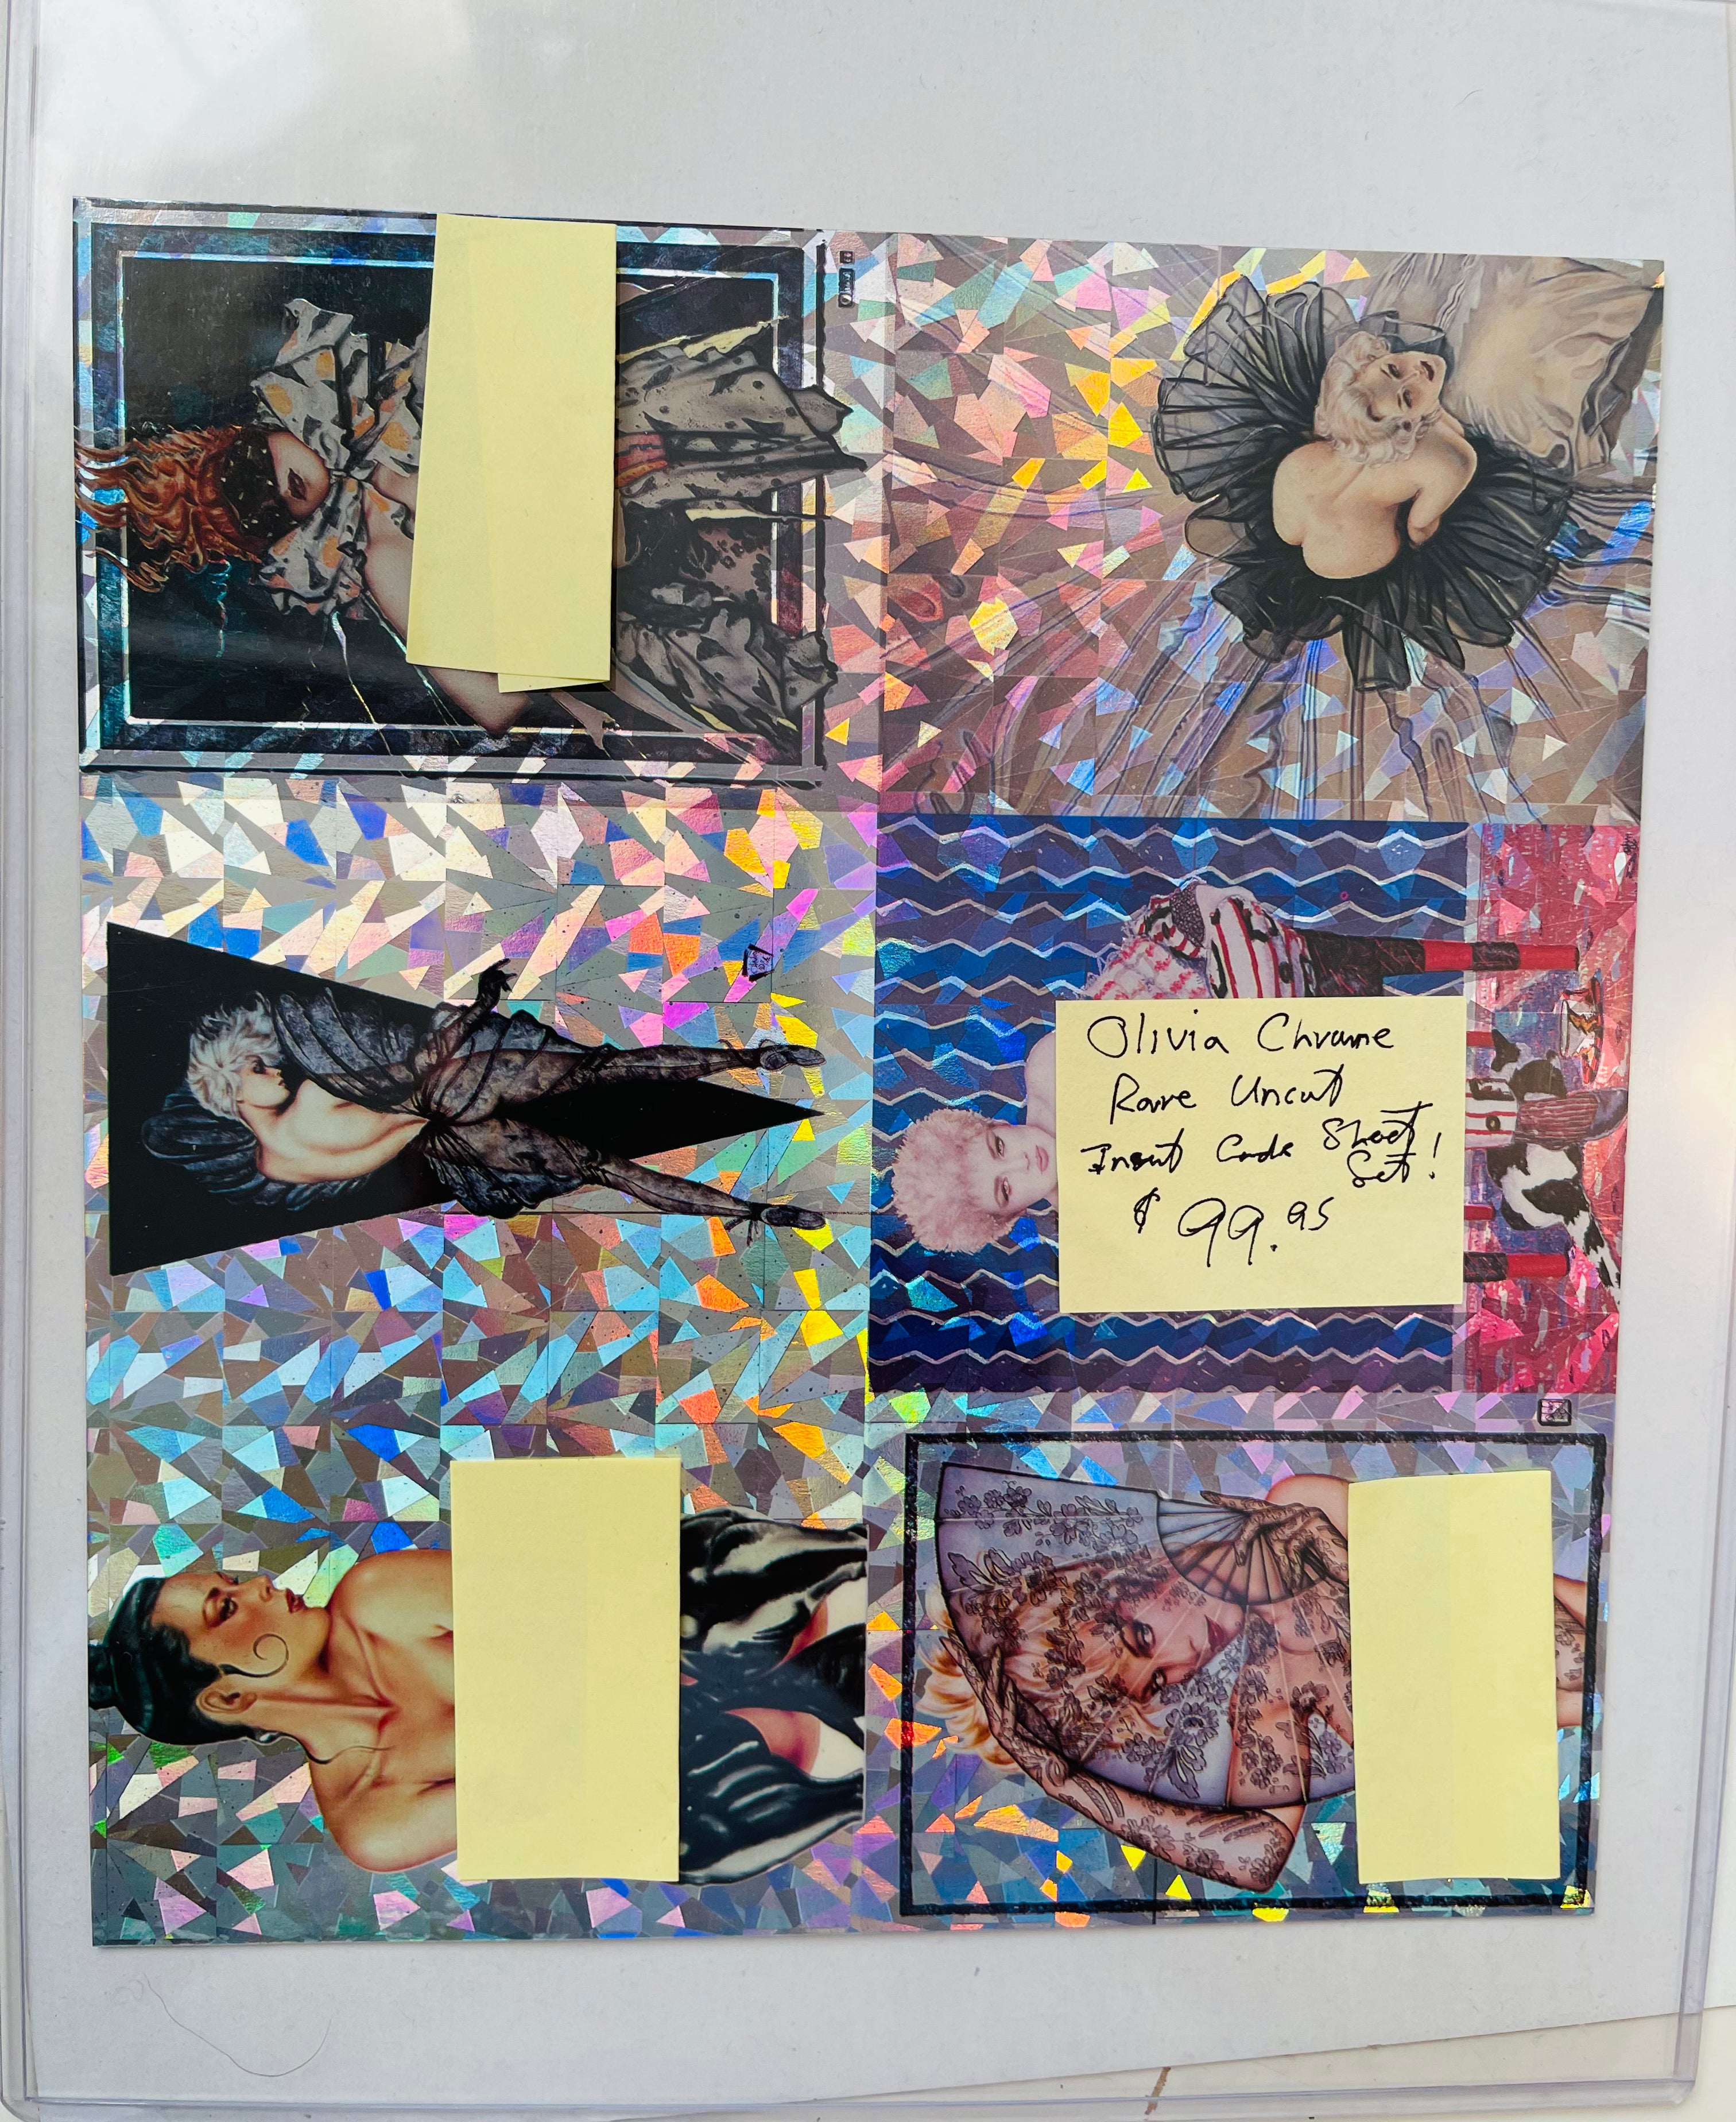 Olivia Fantasy cards rare Foil inserts set uncut cards sheet 1990s